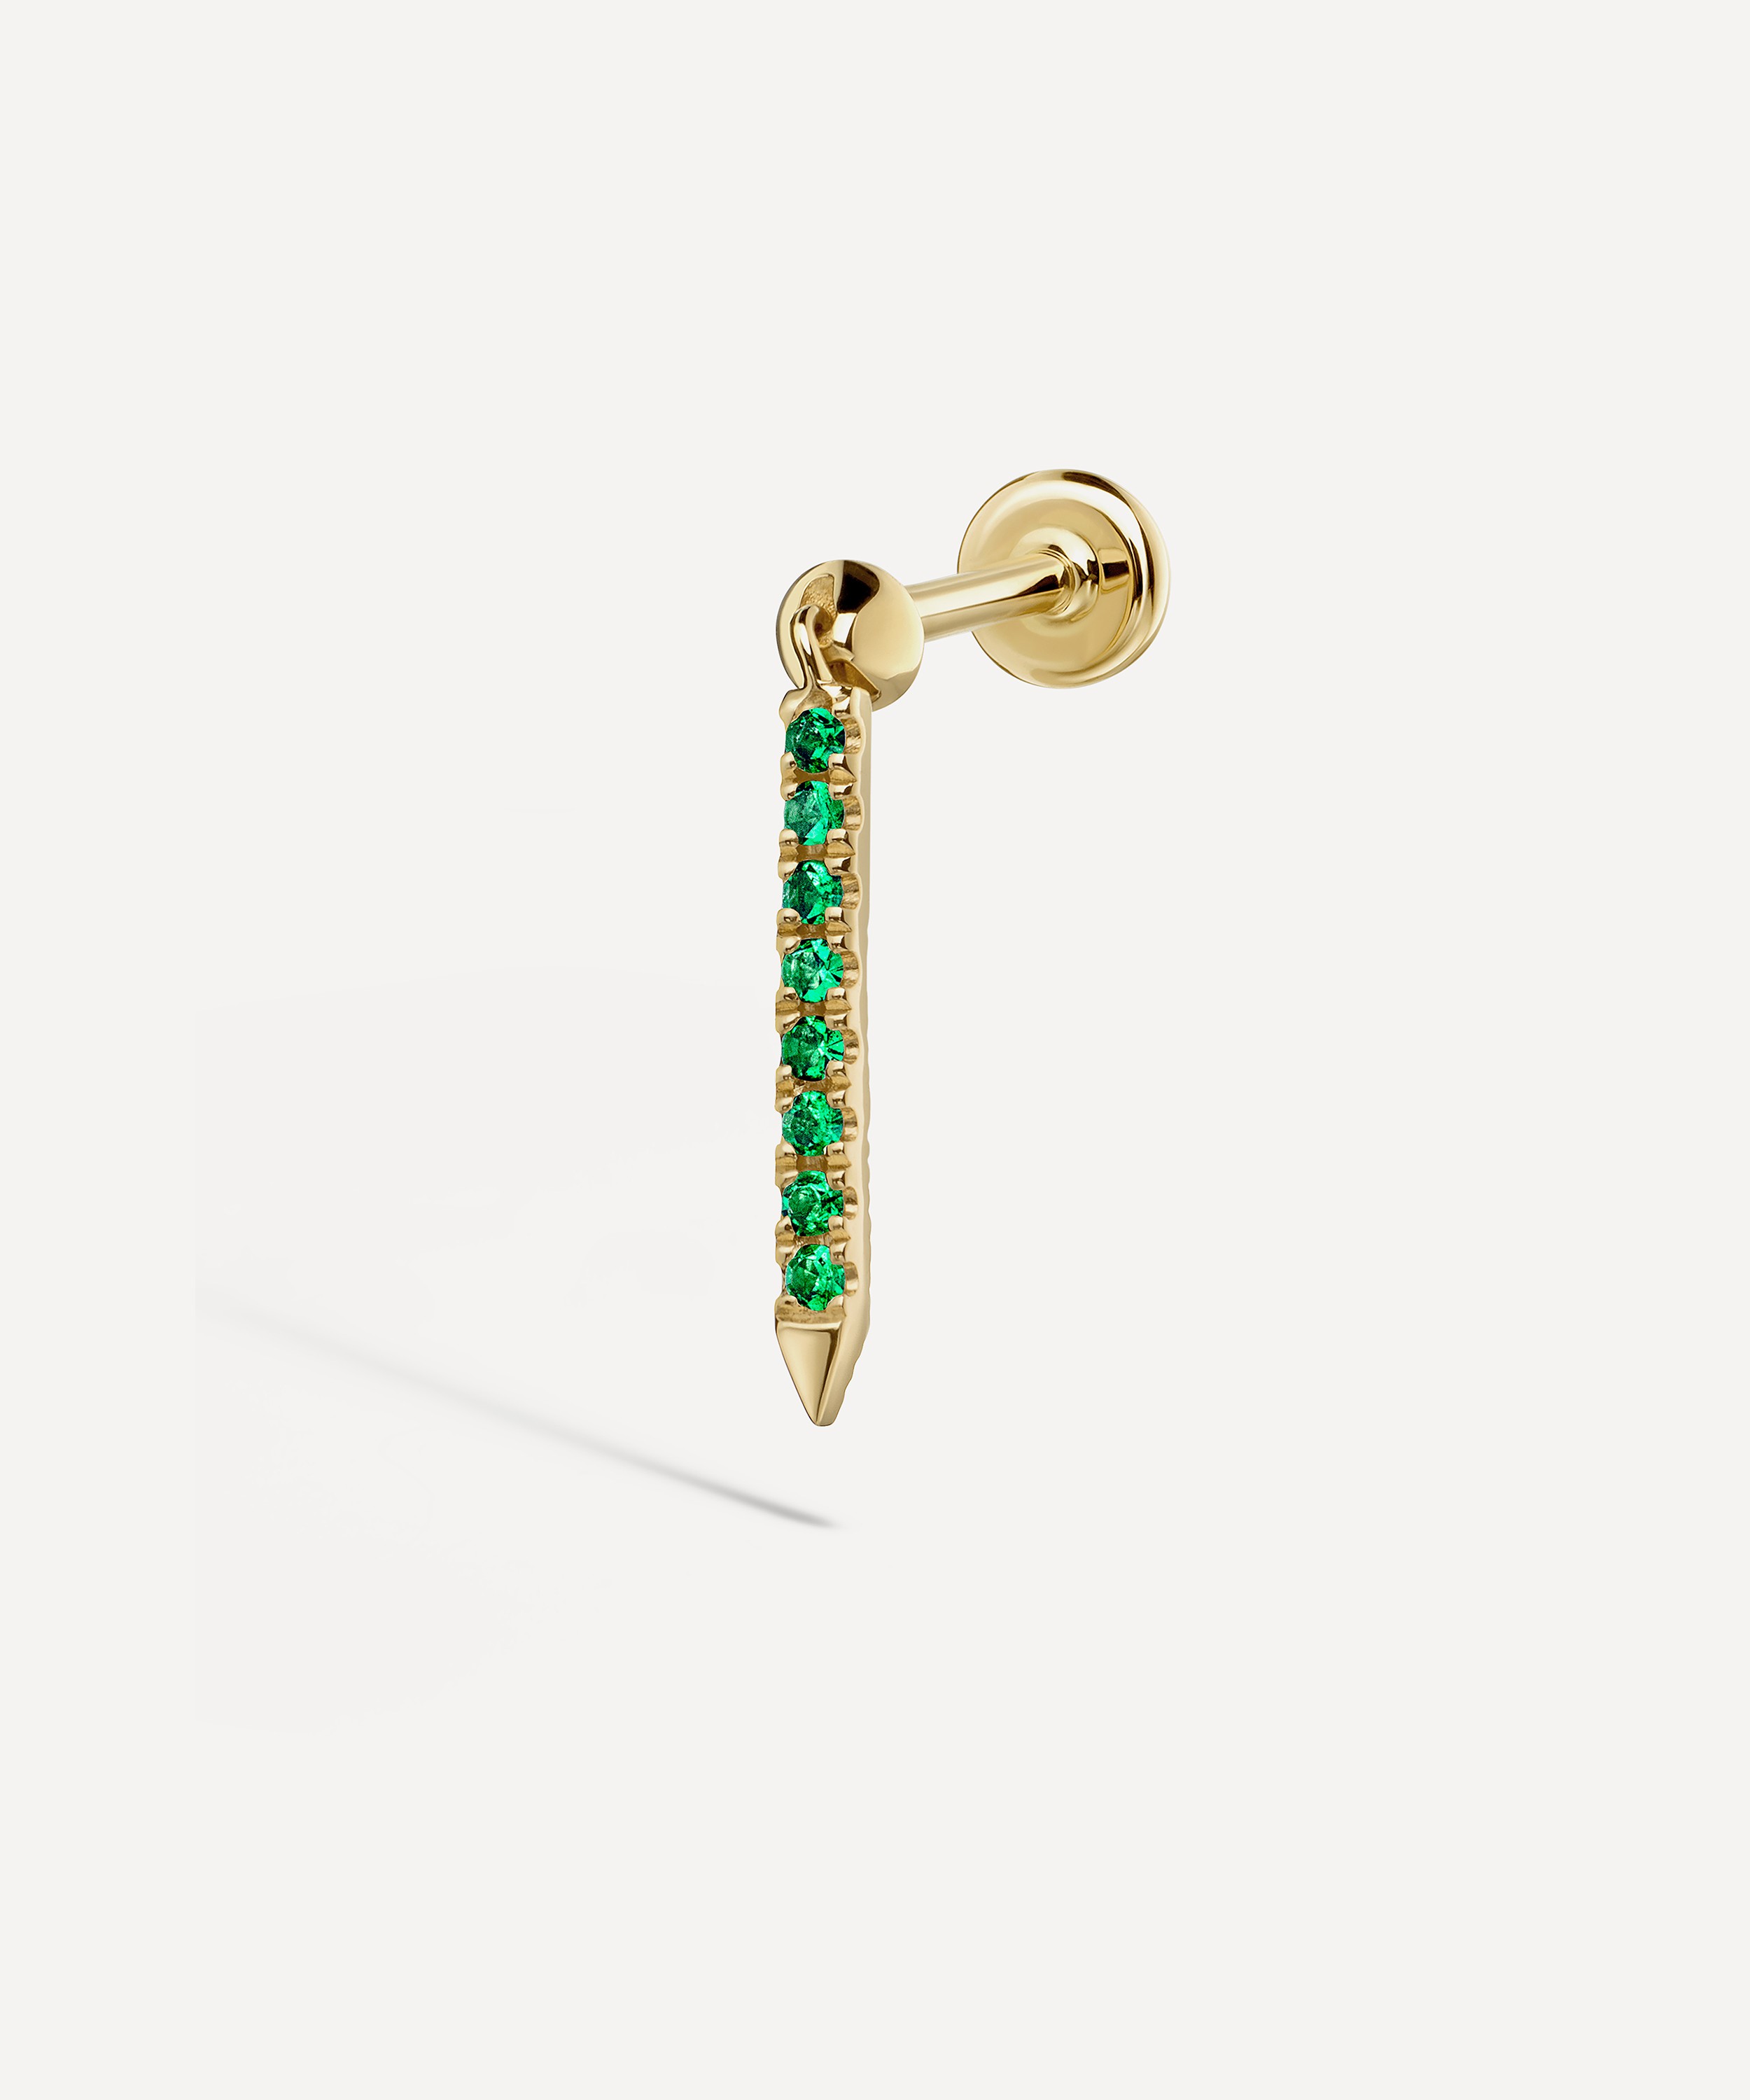 Maria Tash - 18ct 11mm Emerald Eternity Bar Charm Threaded Stud Earring